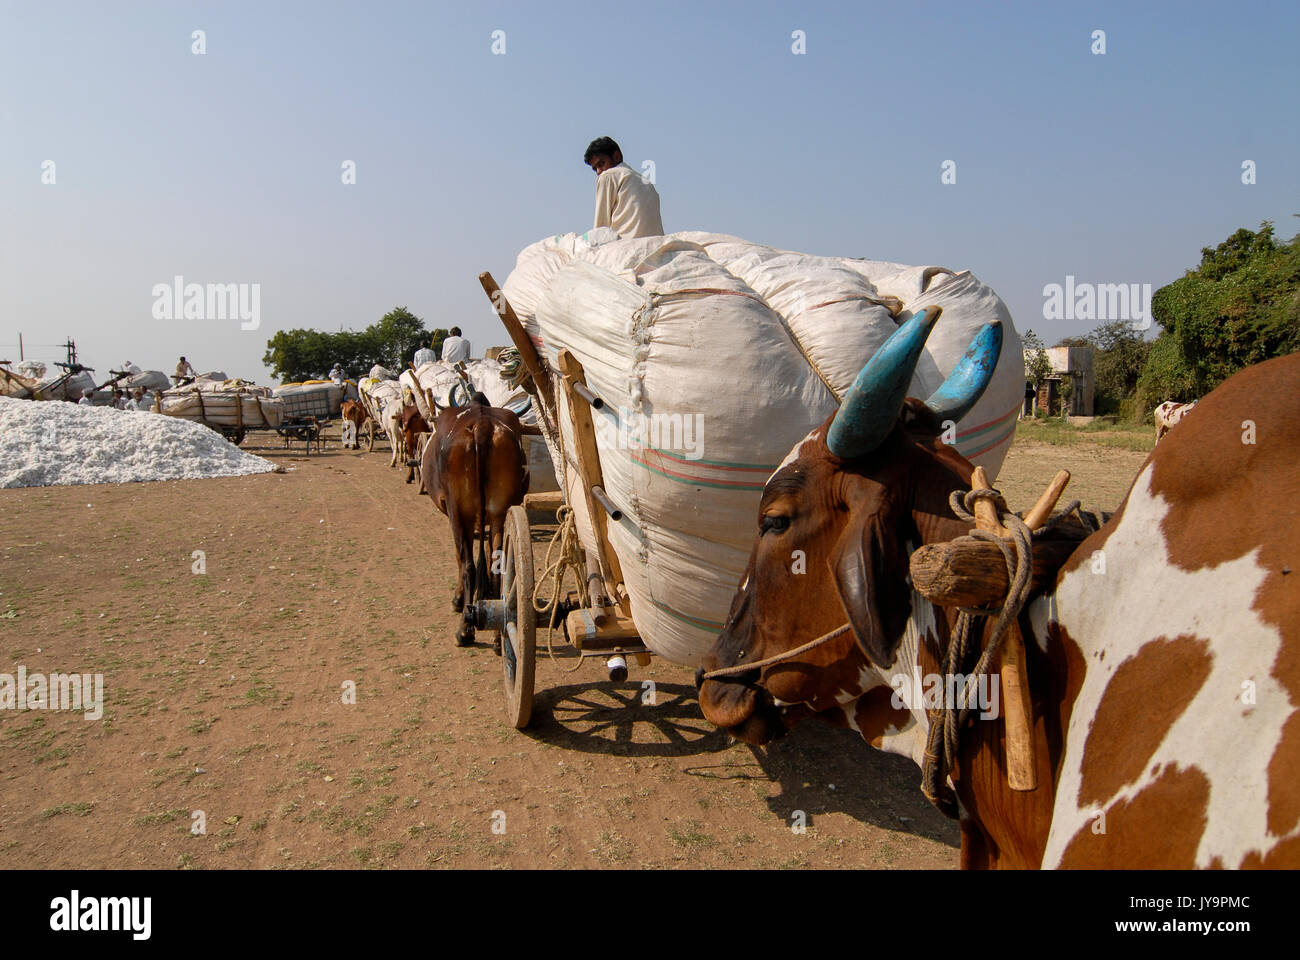 L'Inde Madhya Pradesh , coton, agriculteur récolte du coton transport par charrette après une adjudication à l'usine d'égrenage / Madhya Pradesh indien , Baumwollanbau Baumwollernte transportieren Agriculteur, Ochsengespann mit nach Auktion zu einer Entkernungsfabrik Banque D'Images